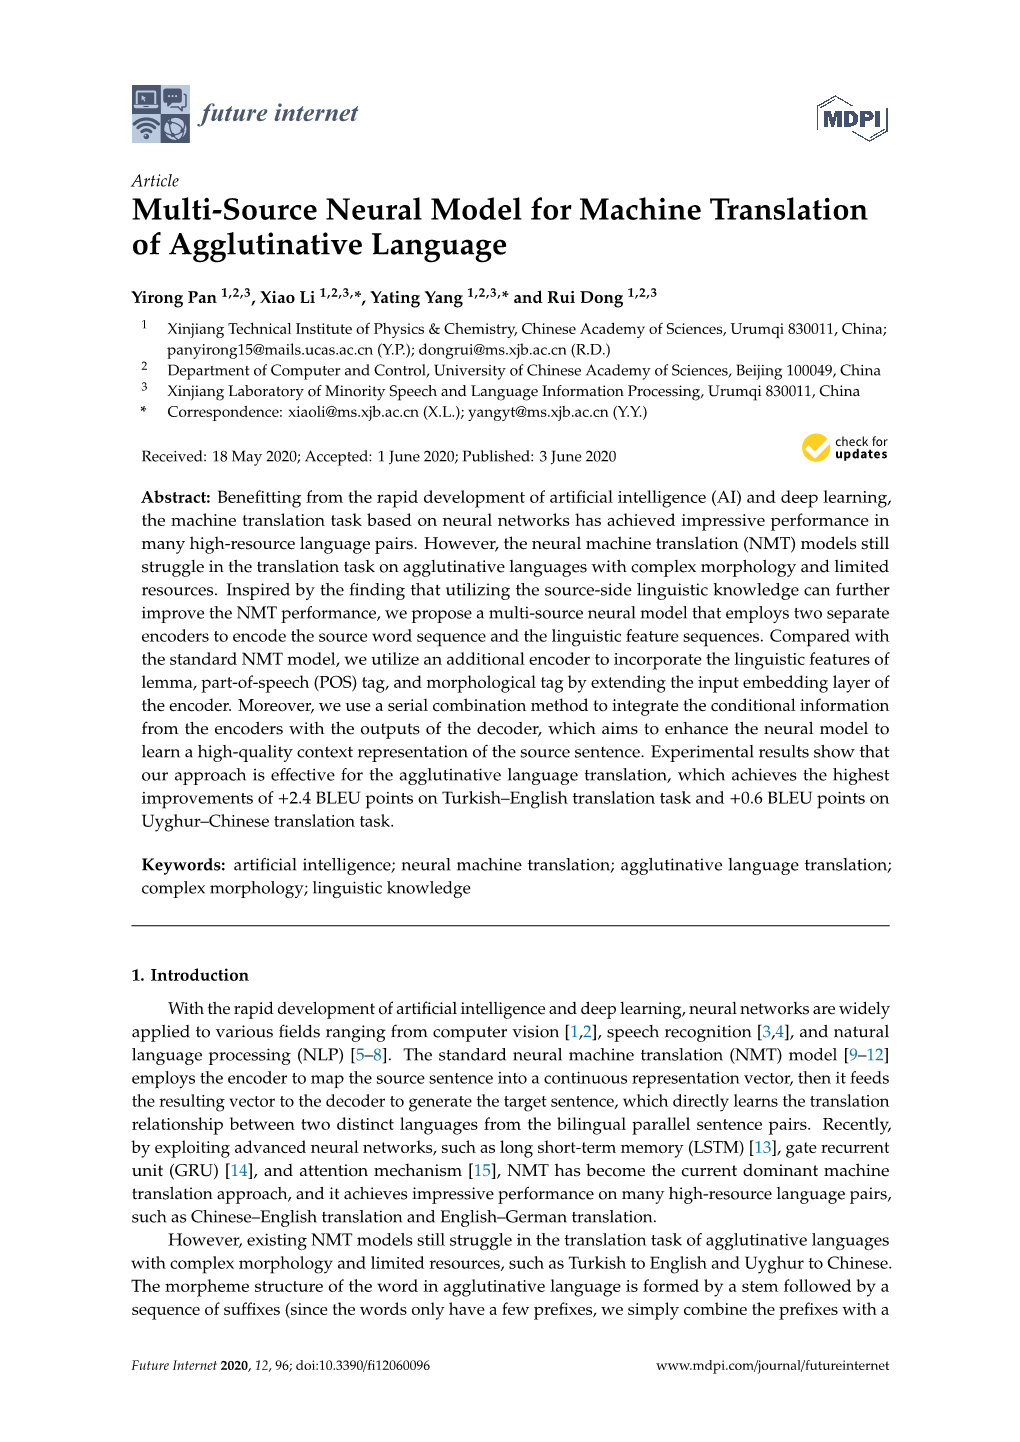 Multi-Source Neural Model for Machine Translation of Agglutinative Language